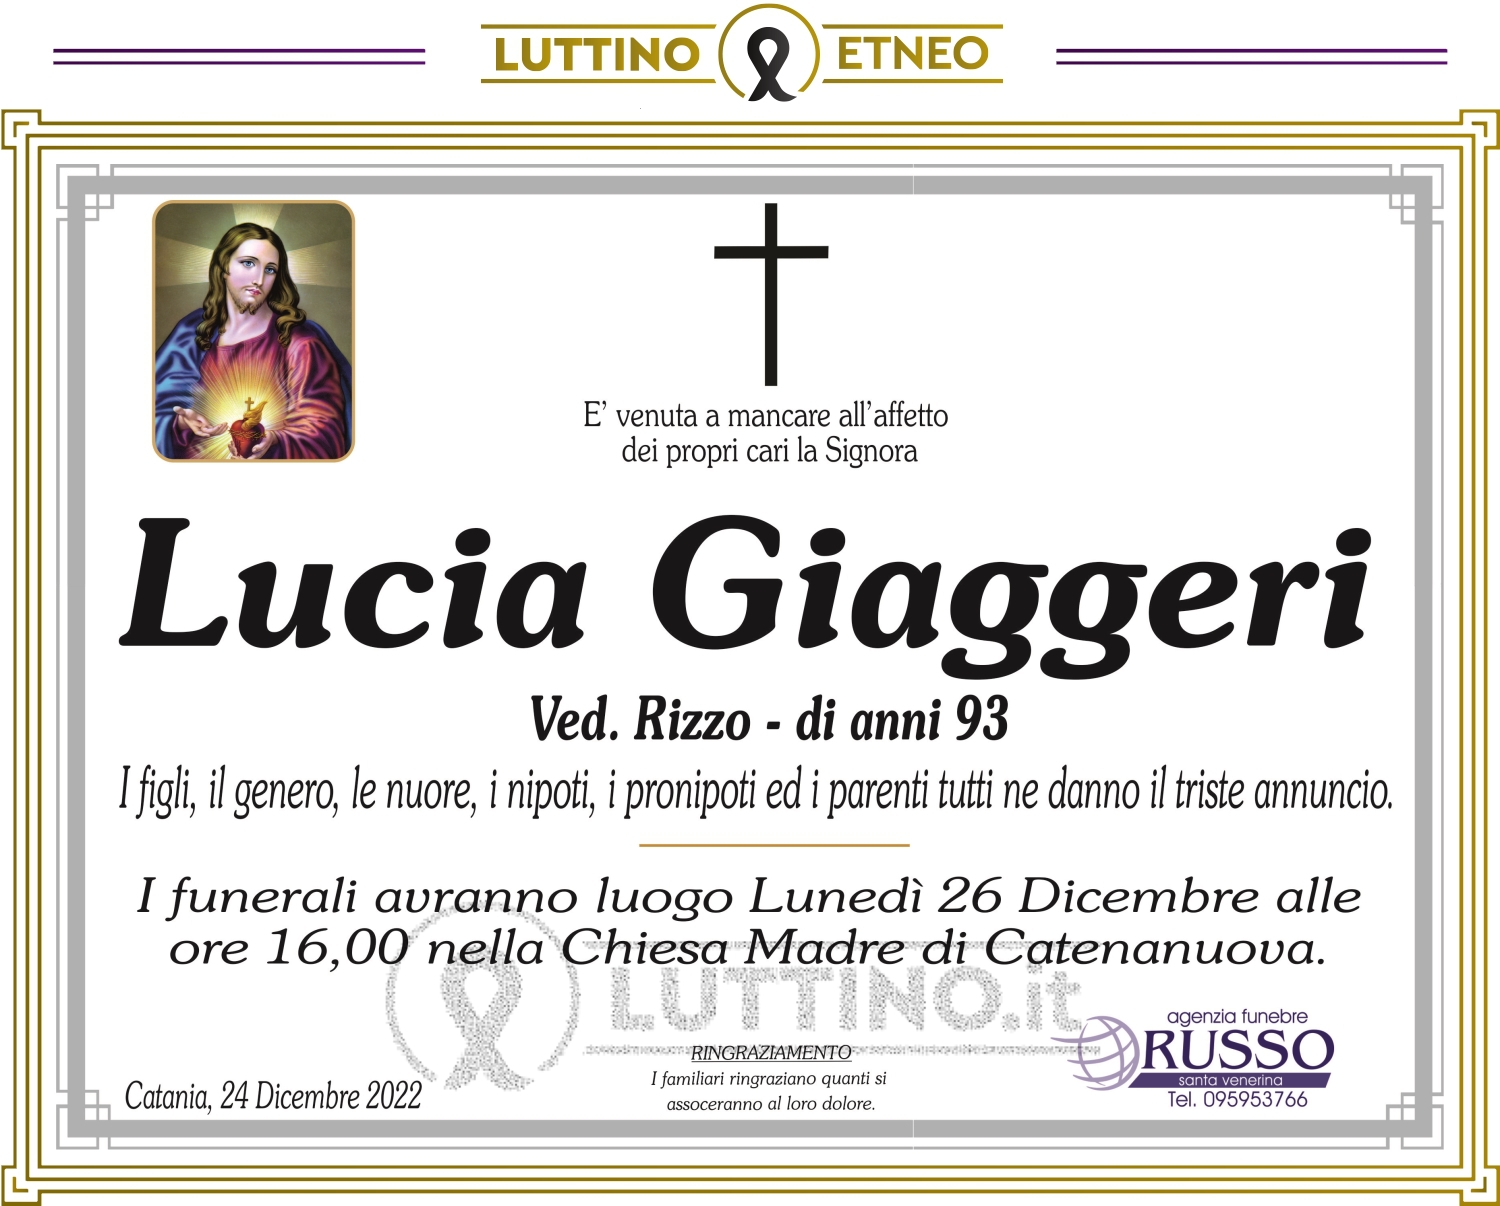 Lucia Giaggeri